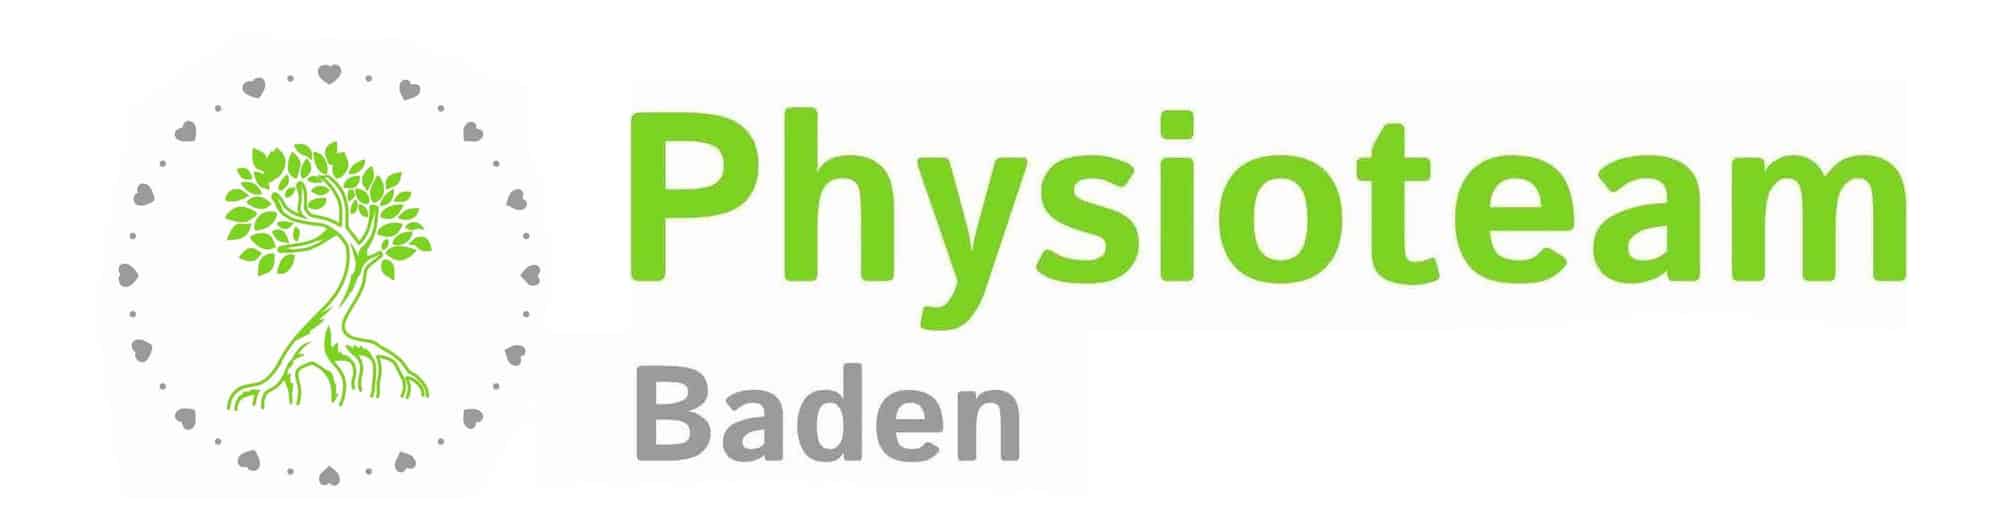 Physiotherapie Baden